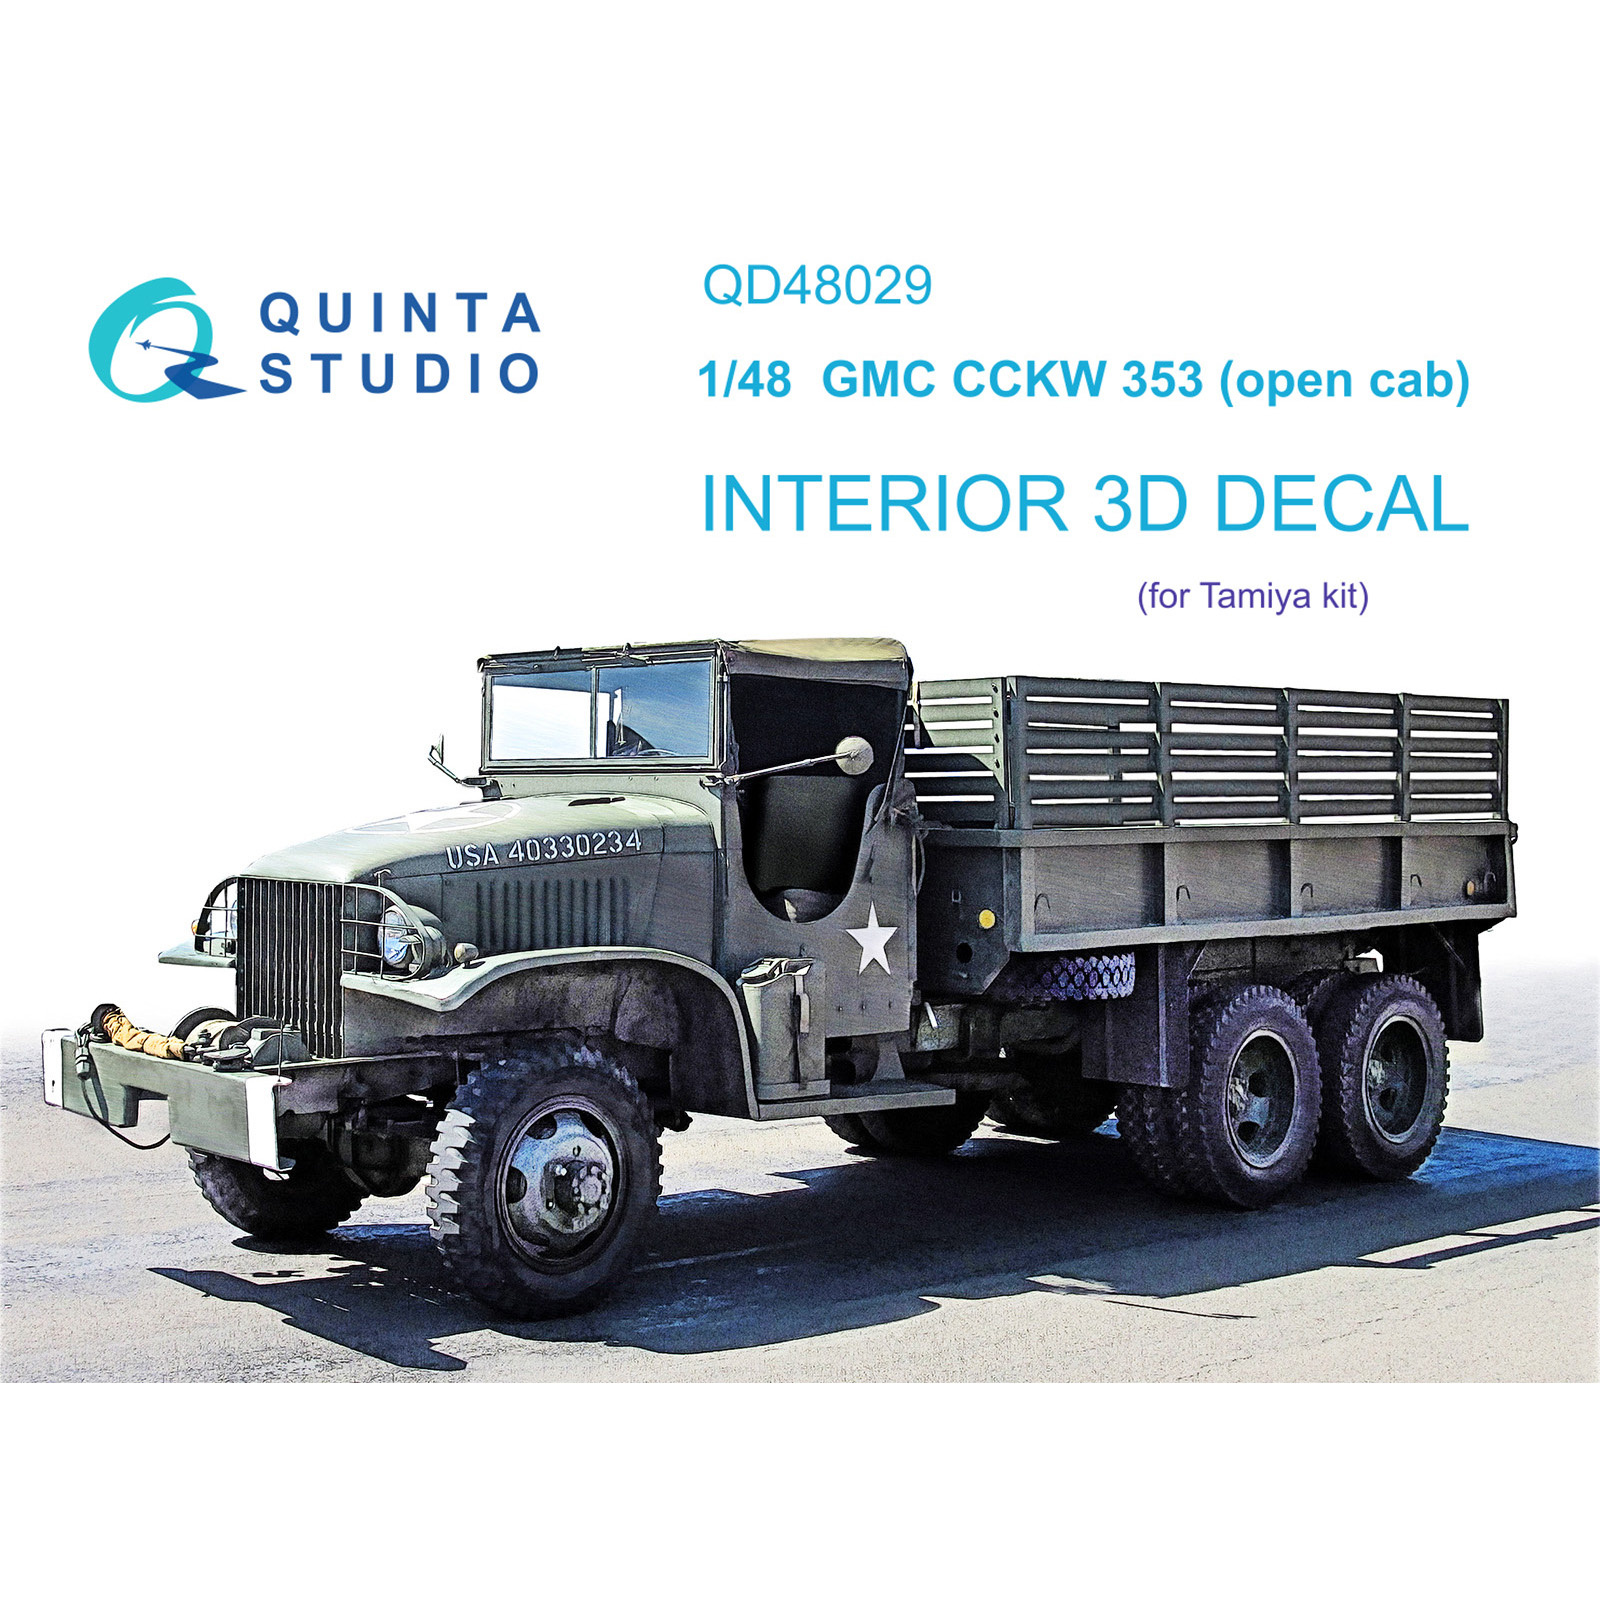 QD48029 Quinta Studio 1/48 3D Interior Decal GMC CCKW 353 (open cab) (Tamiya)